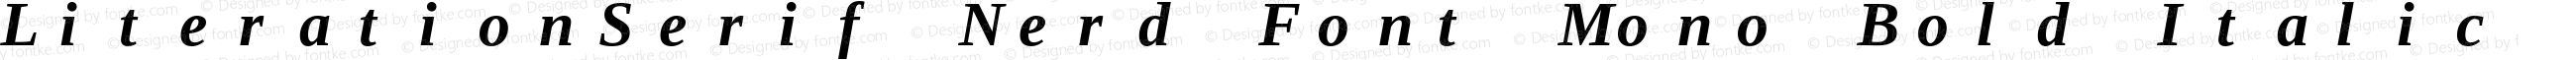 LiterationSerif Nerd Font Mono Bold Italic